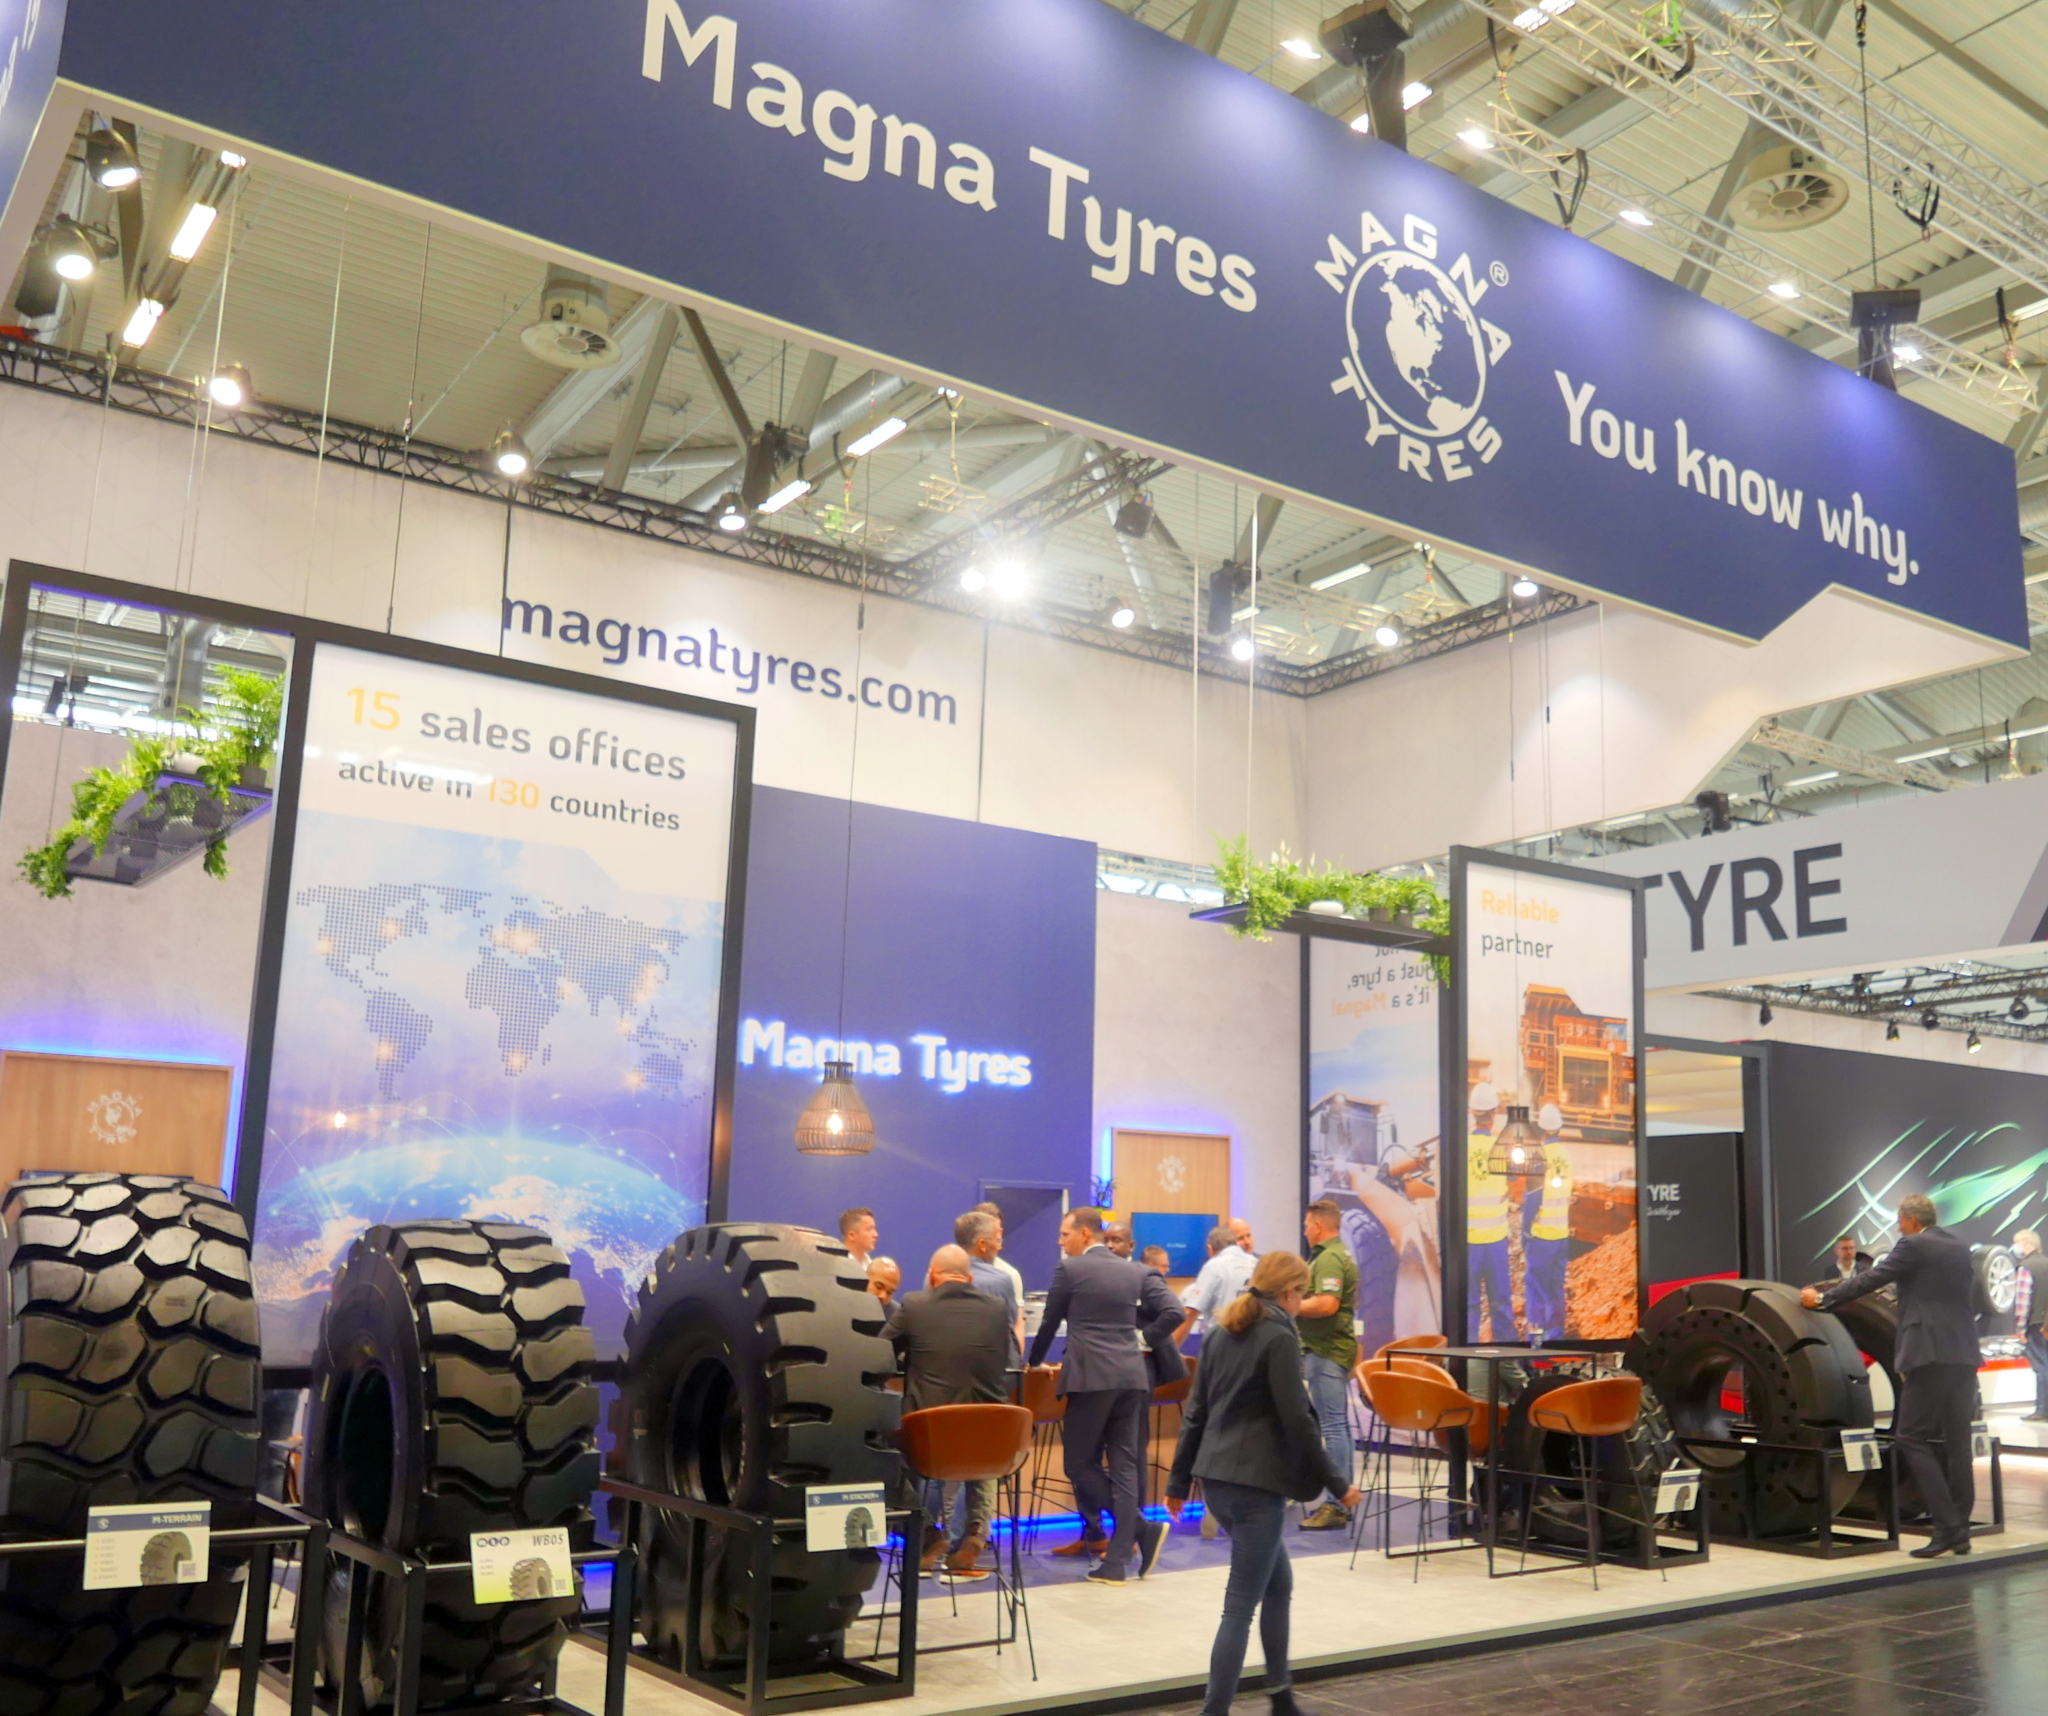 Magna Tyres: growth despite Covid